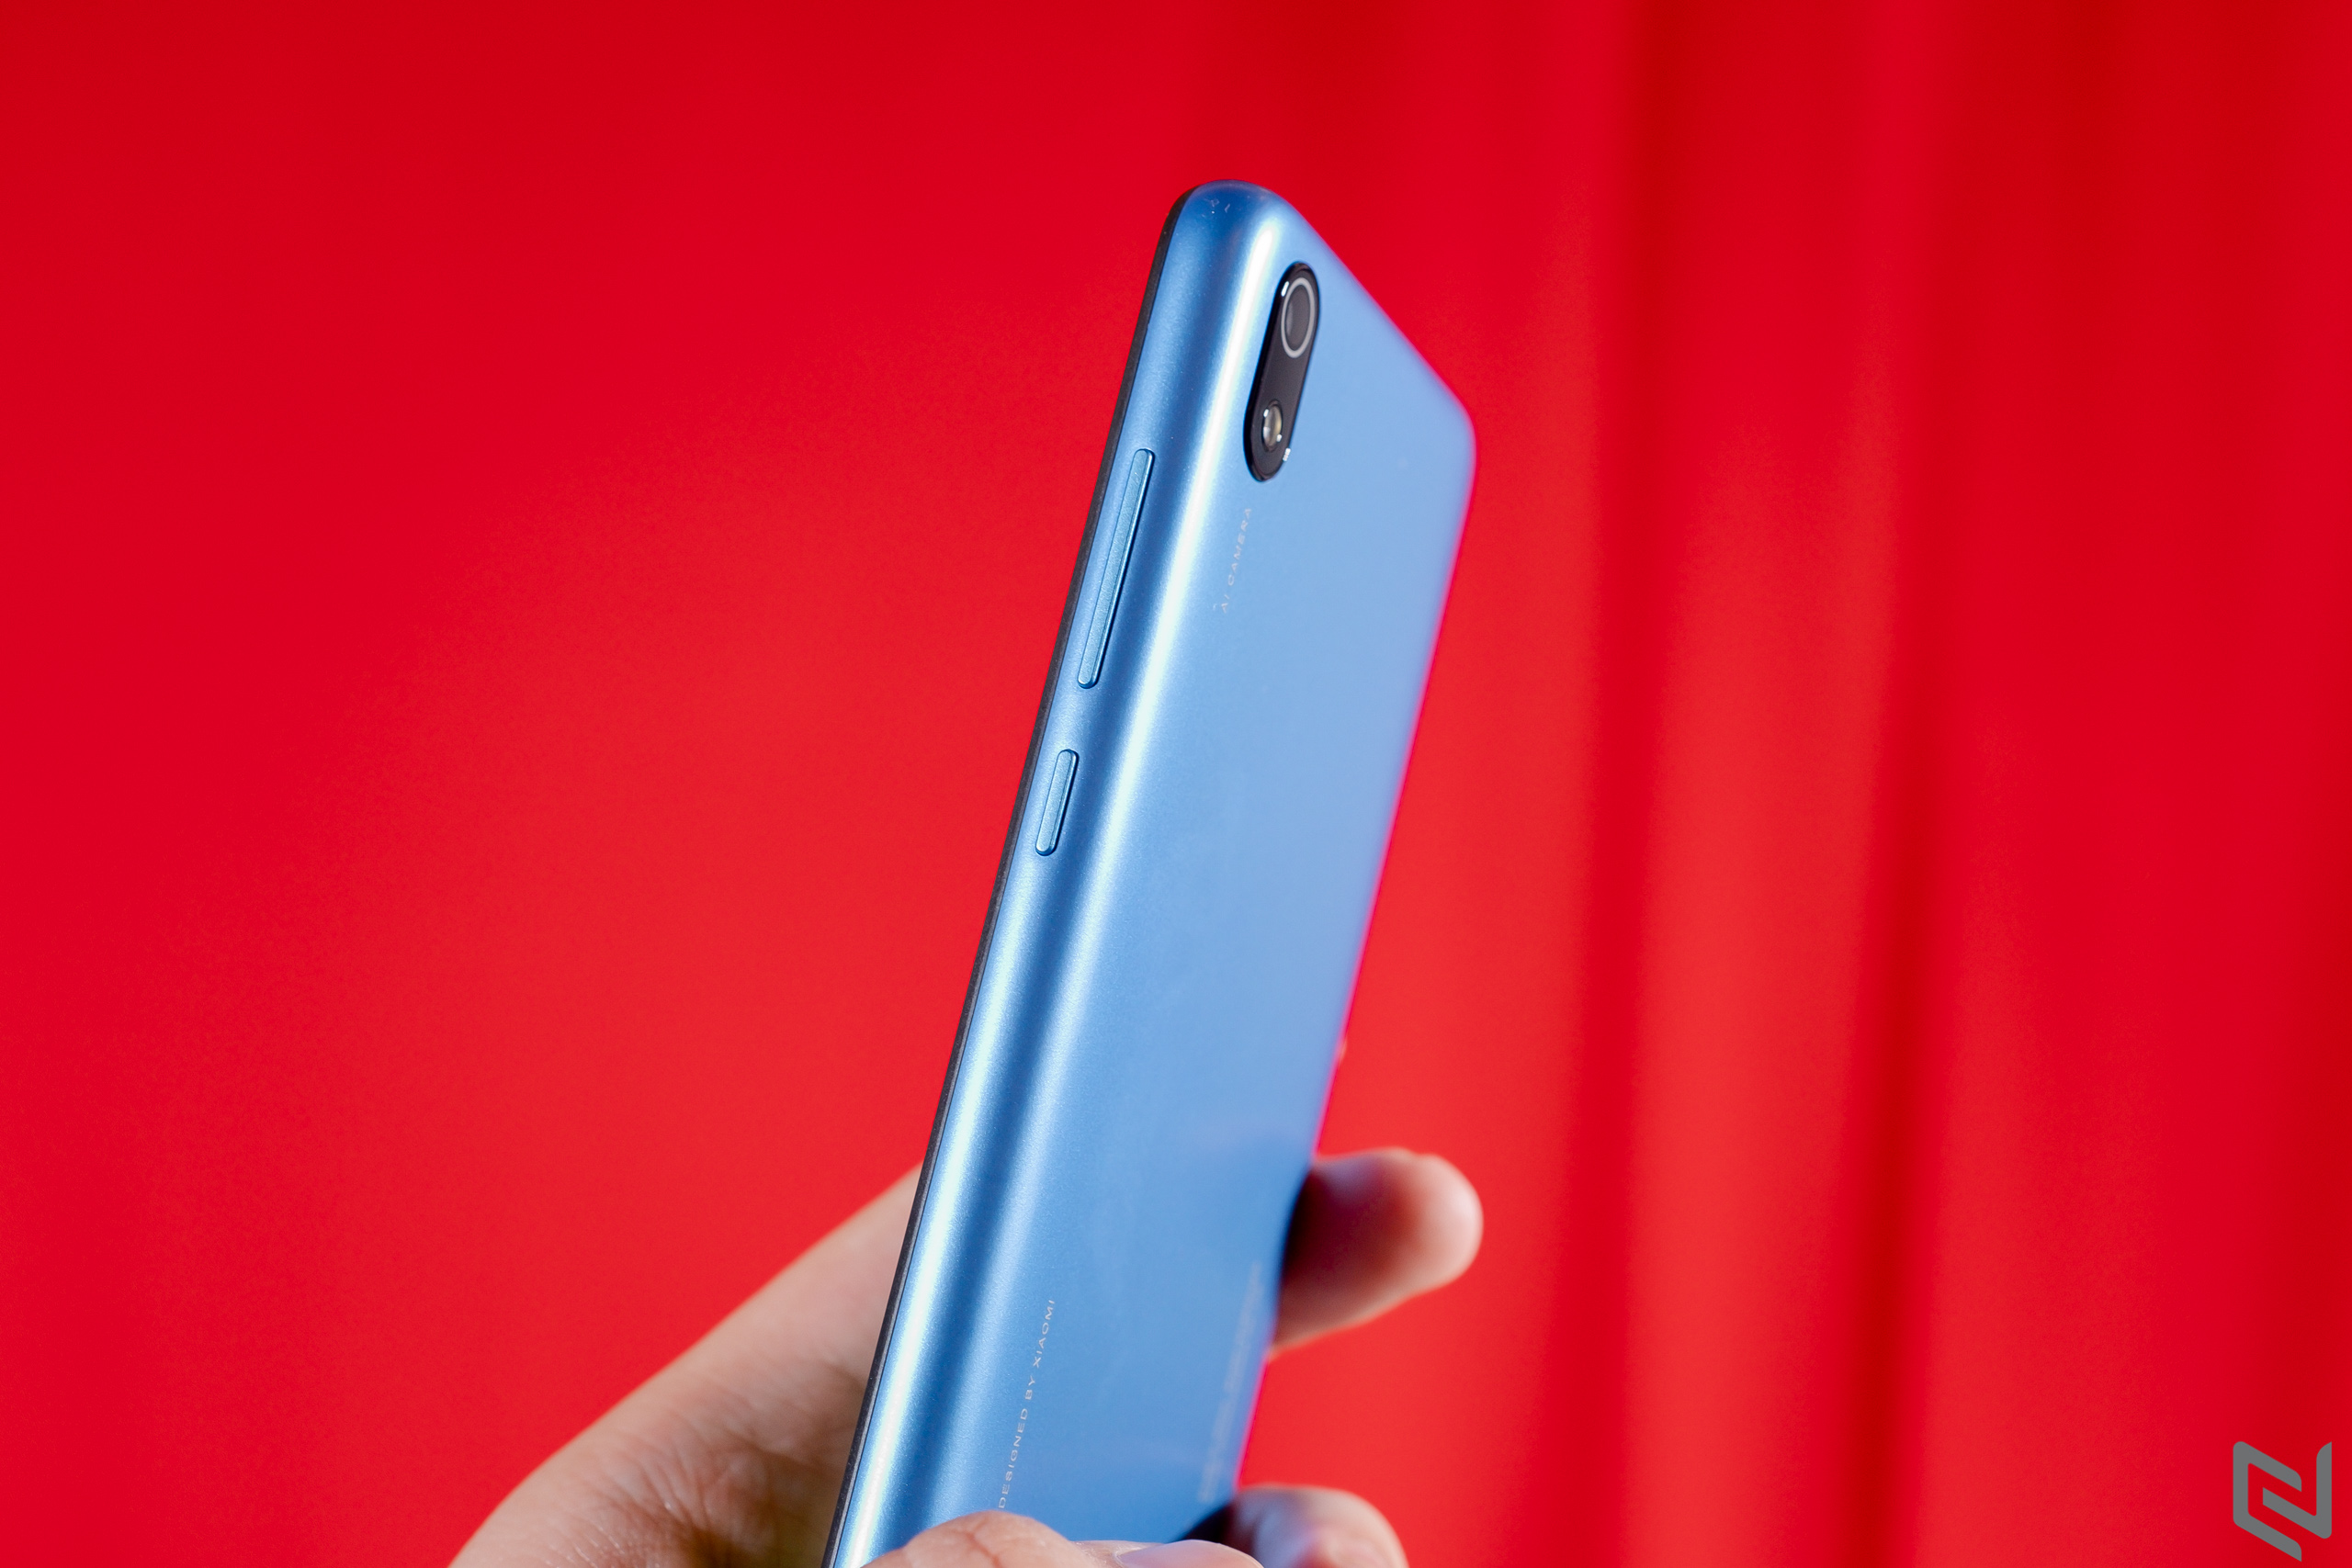 Xiaomi ra mắt bộ ba smartphone Mi 9T, Redmi 7A và Mi A3